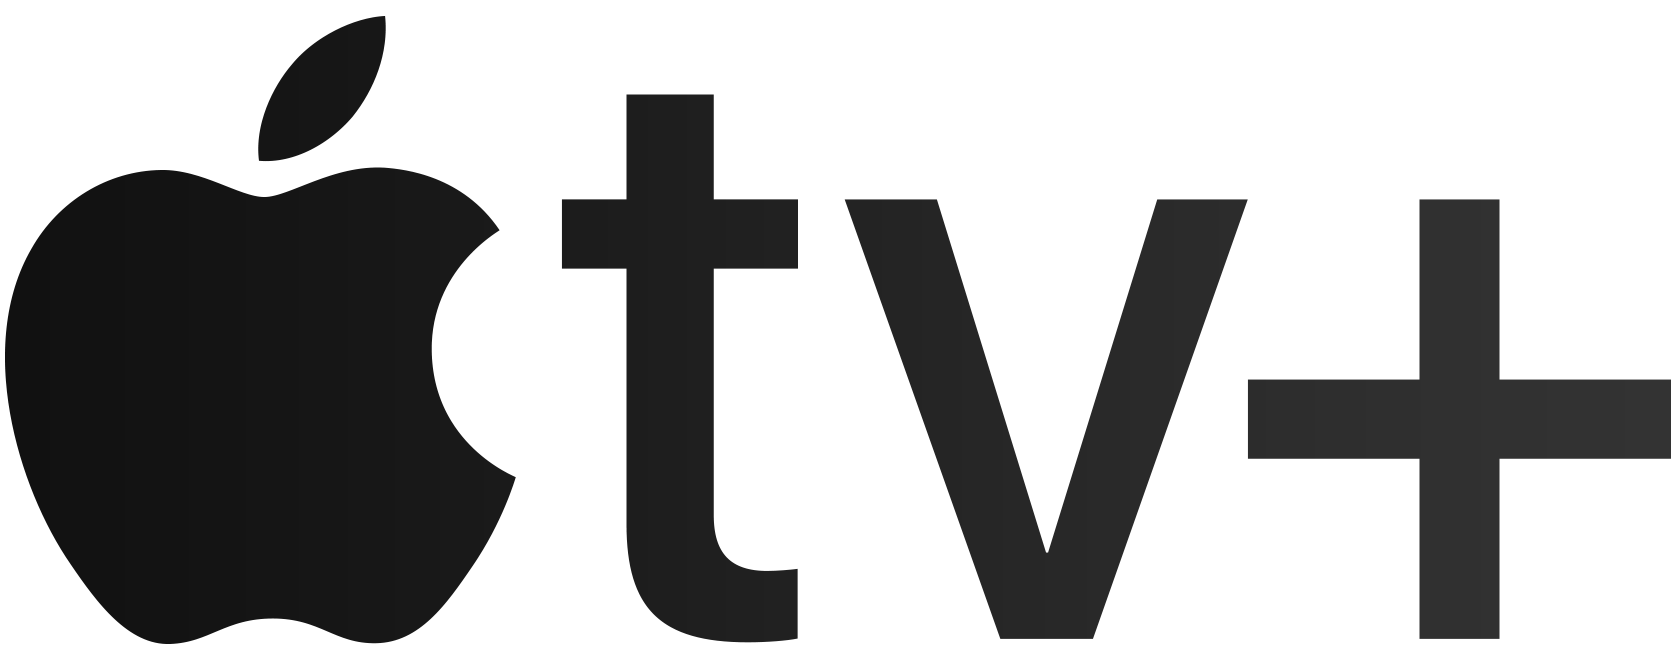 Apple_TV + _logo.png